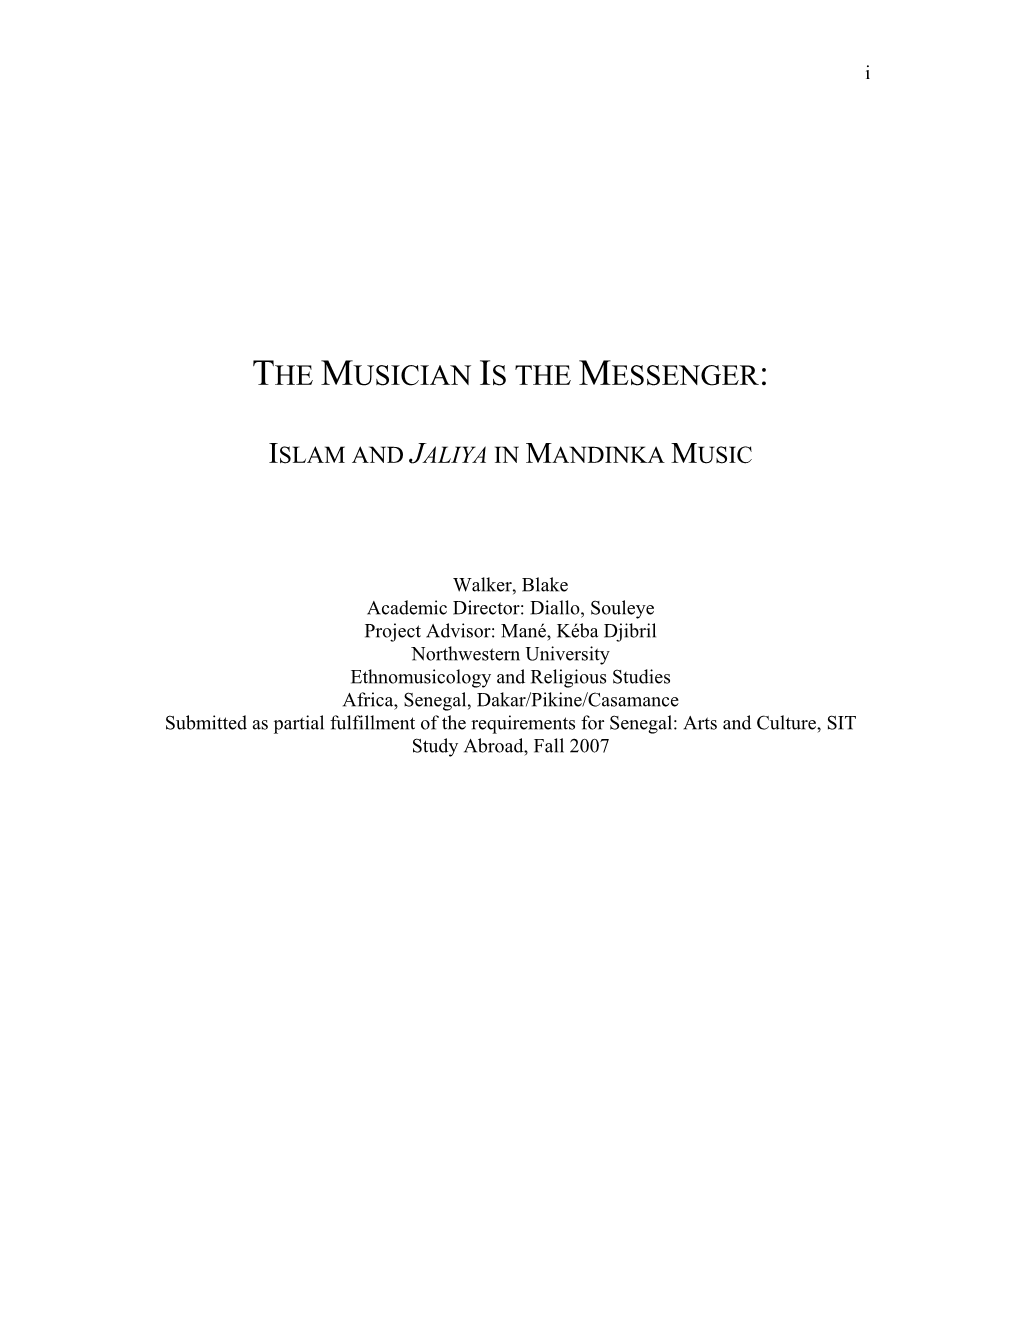 The Musician Is the Messenger: Islam and Jaliya in Mandinka Music